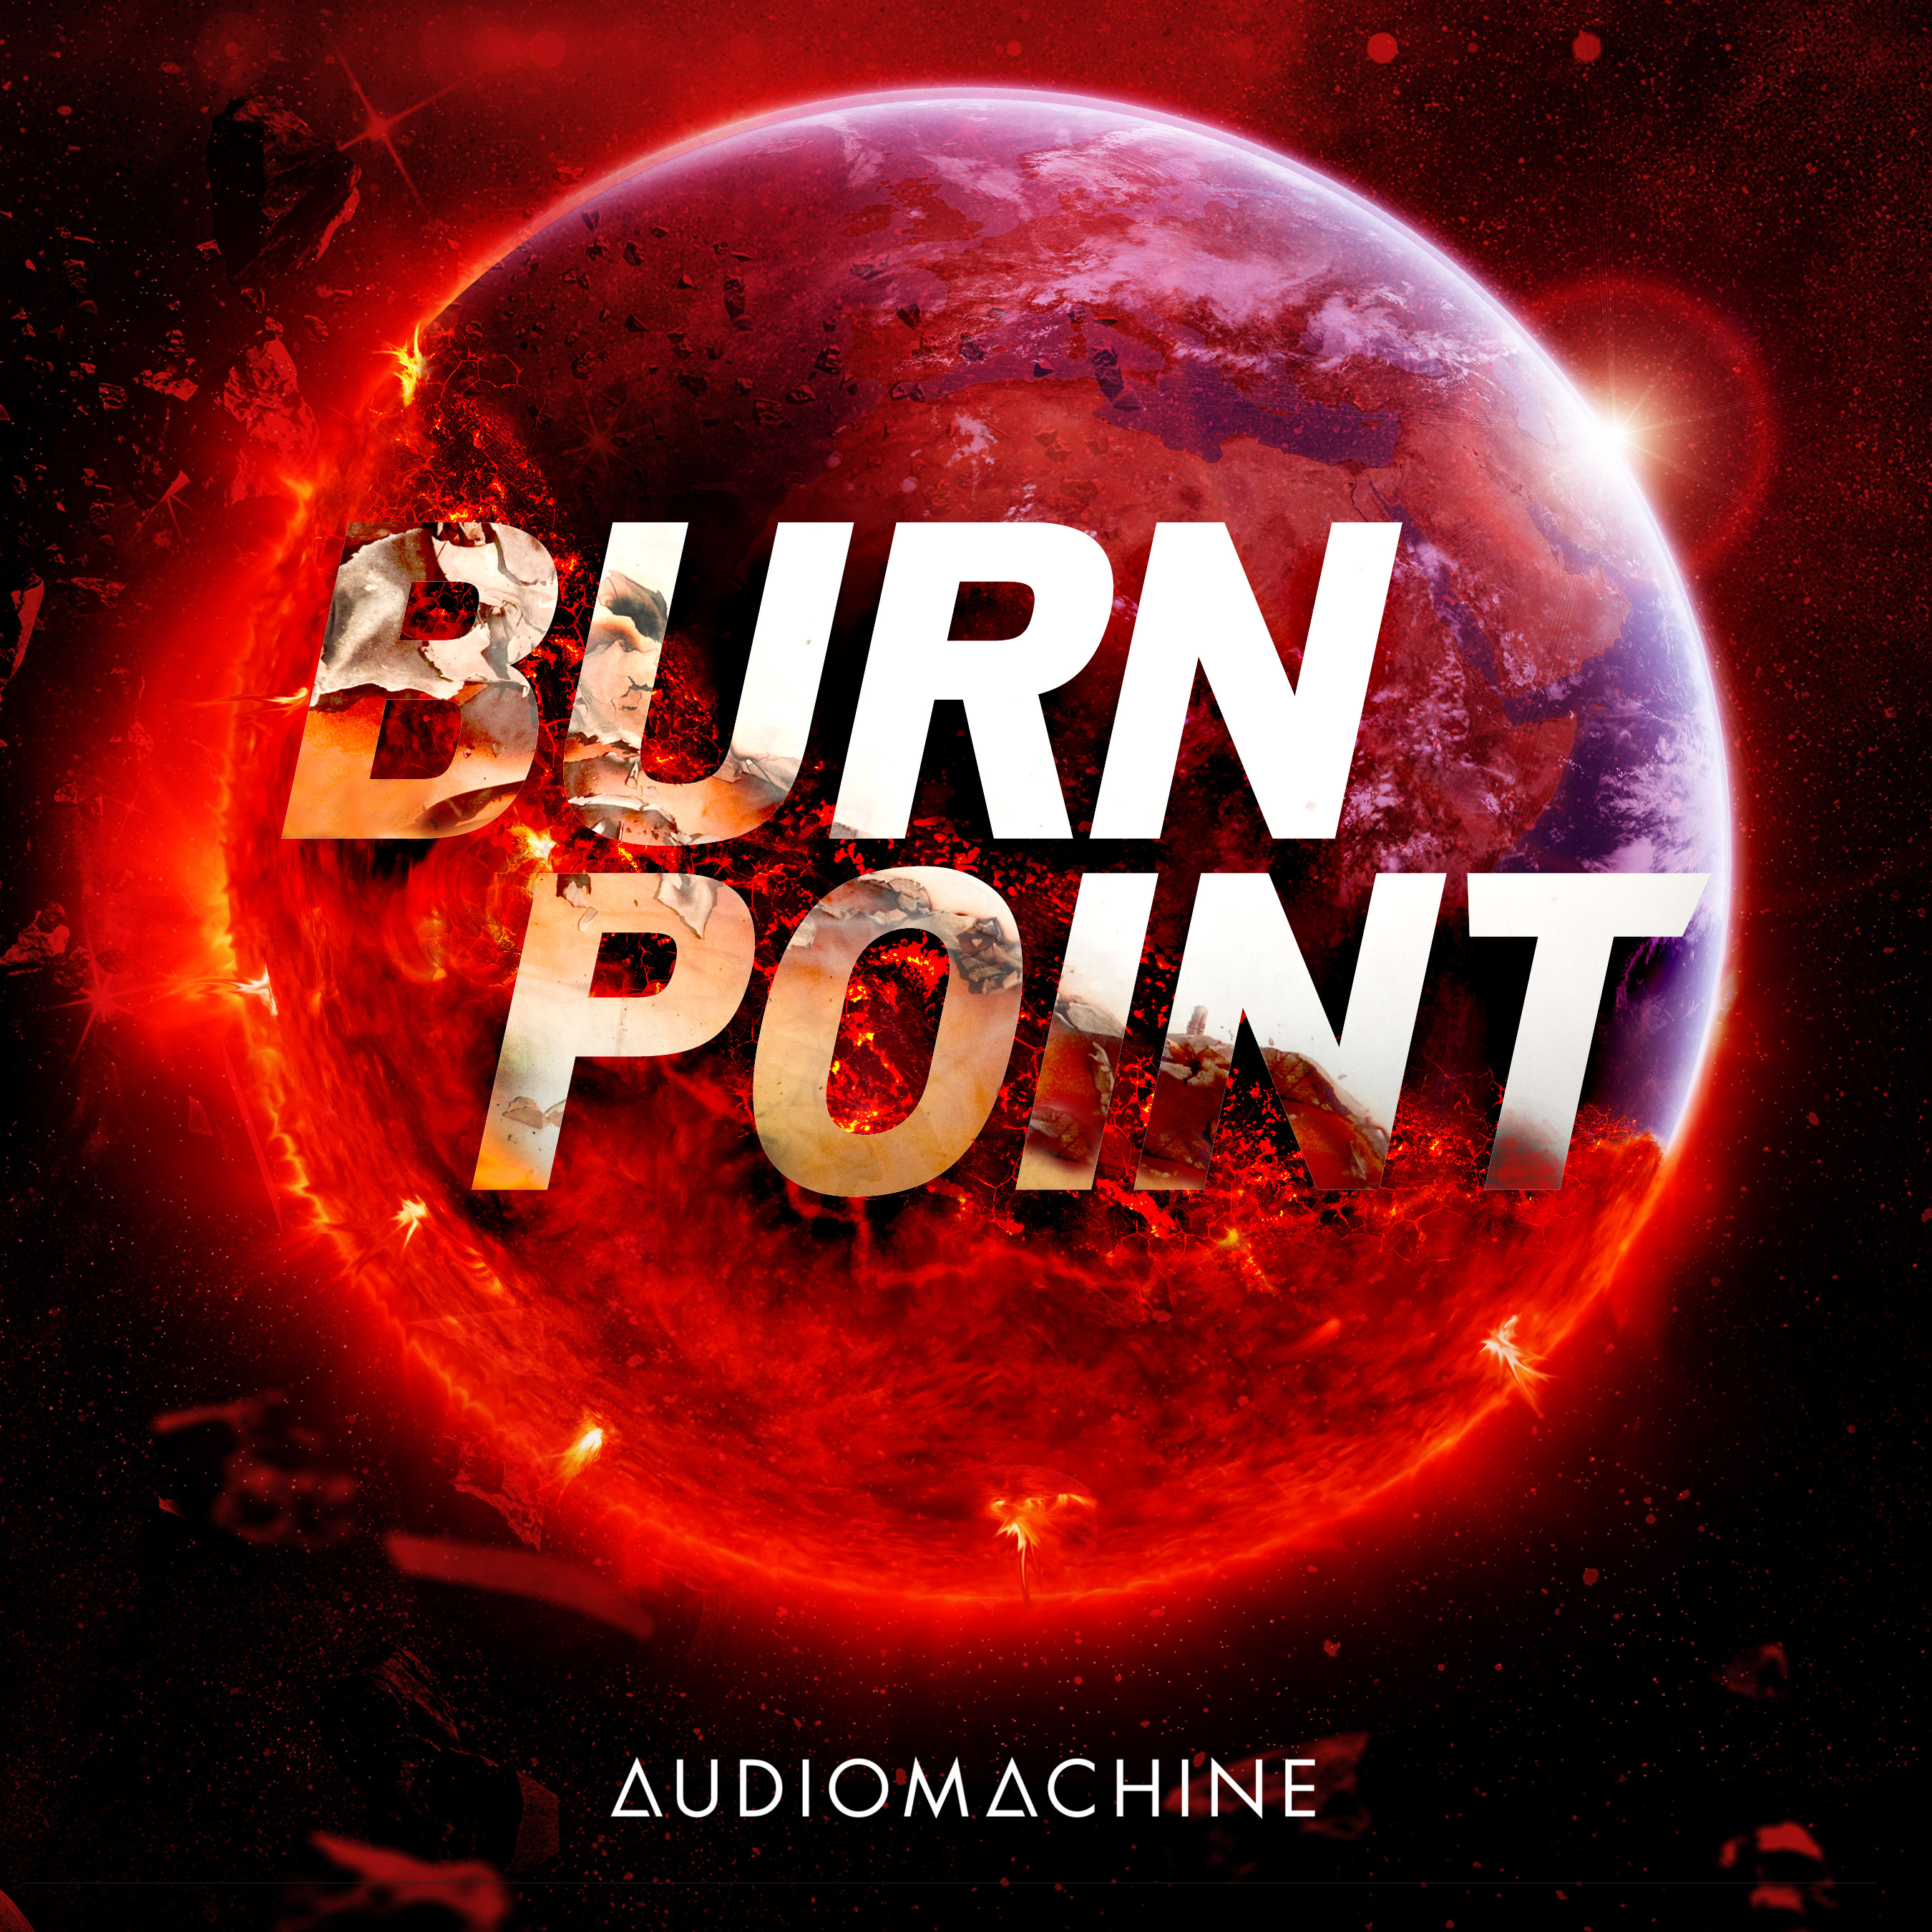 Burn Point